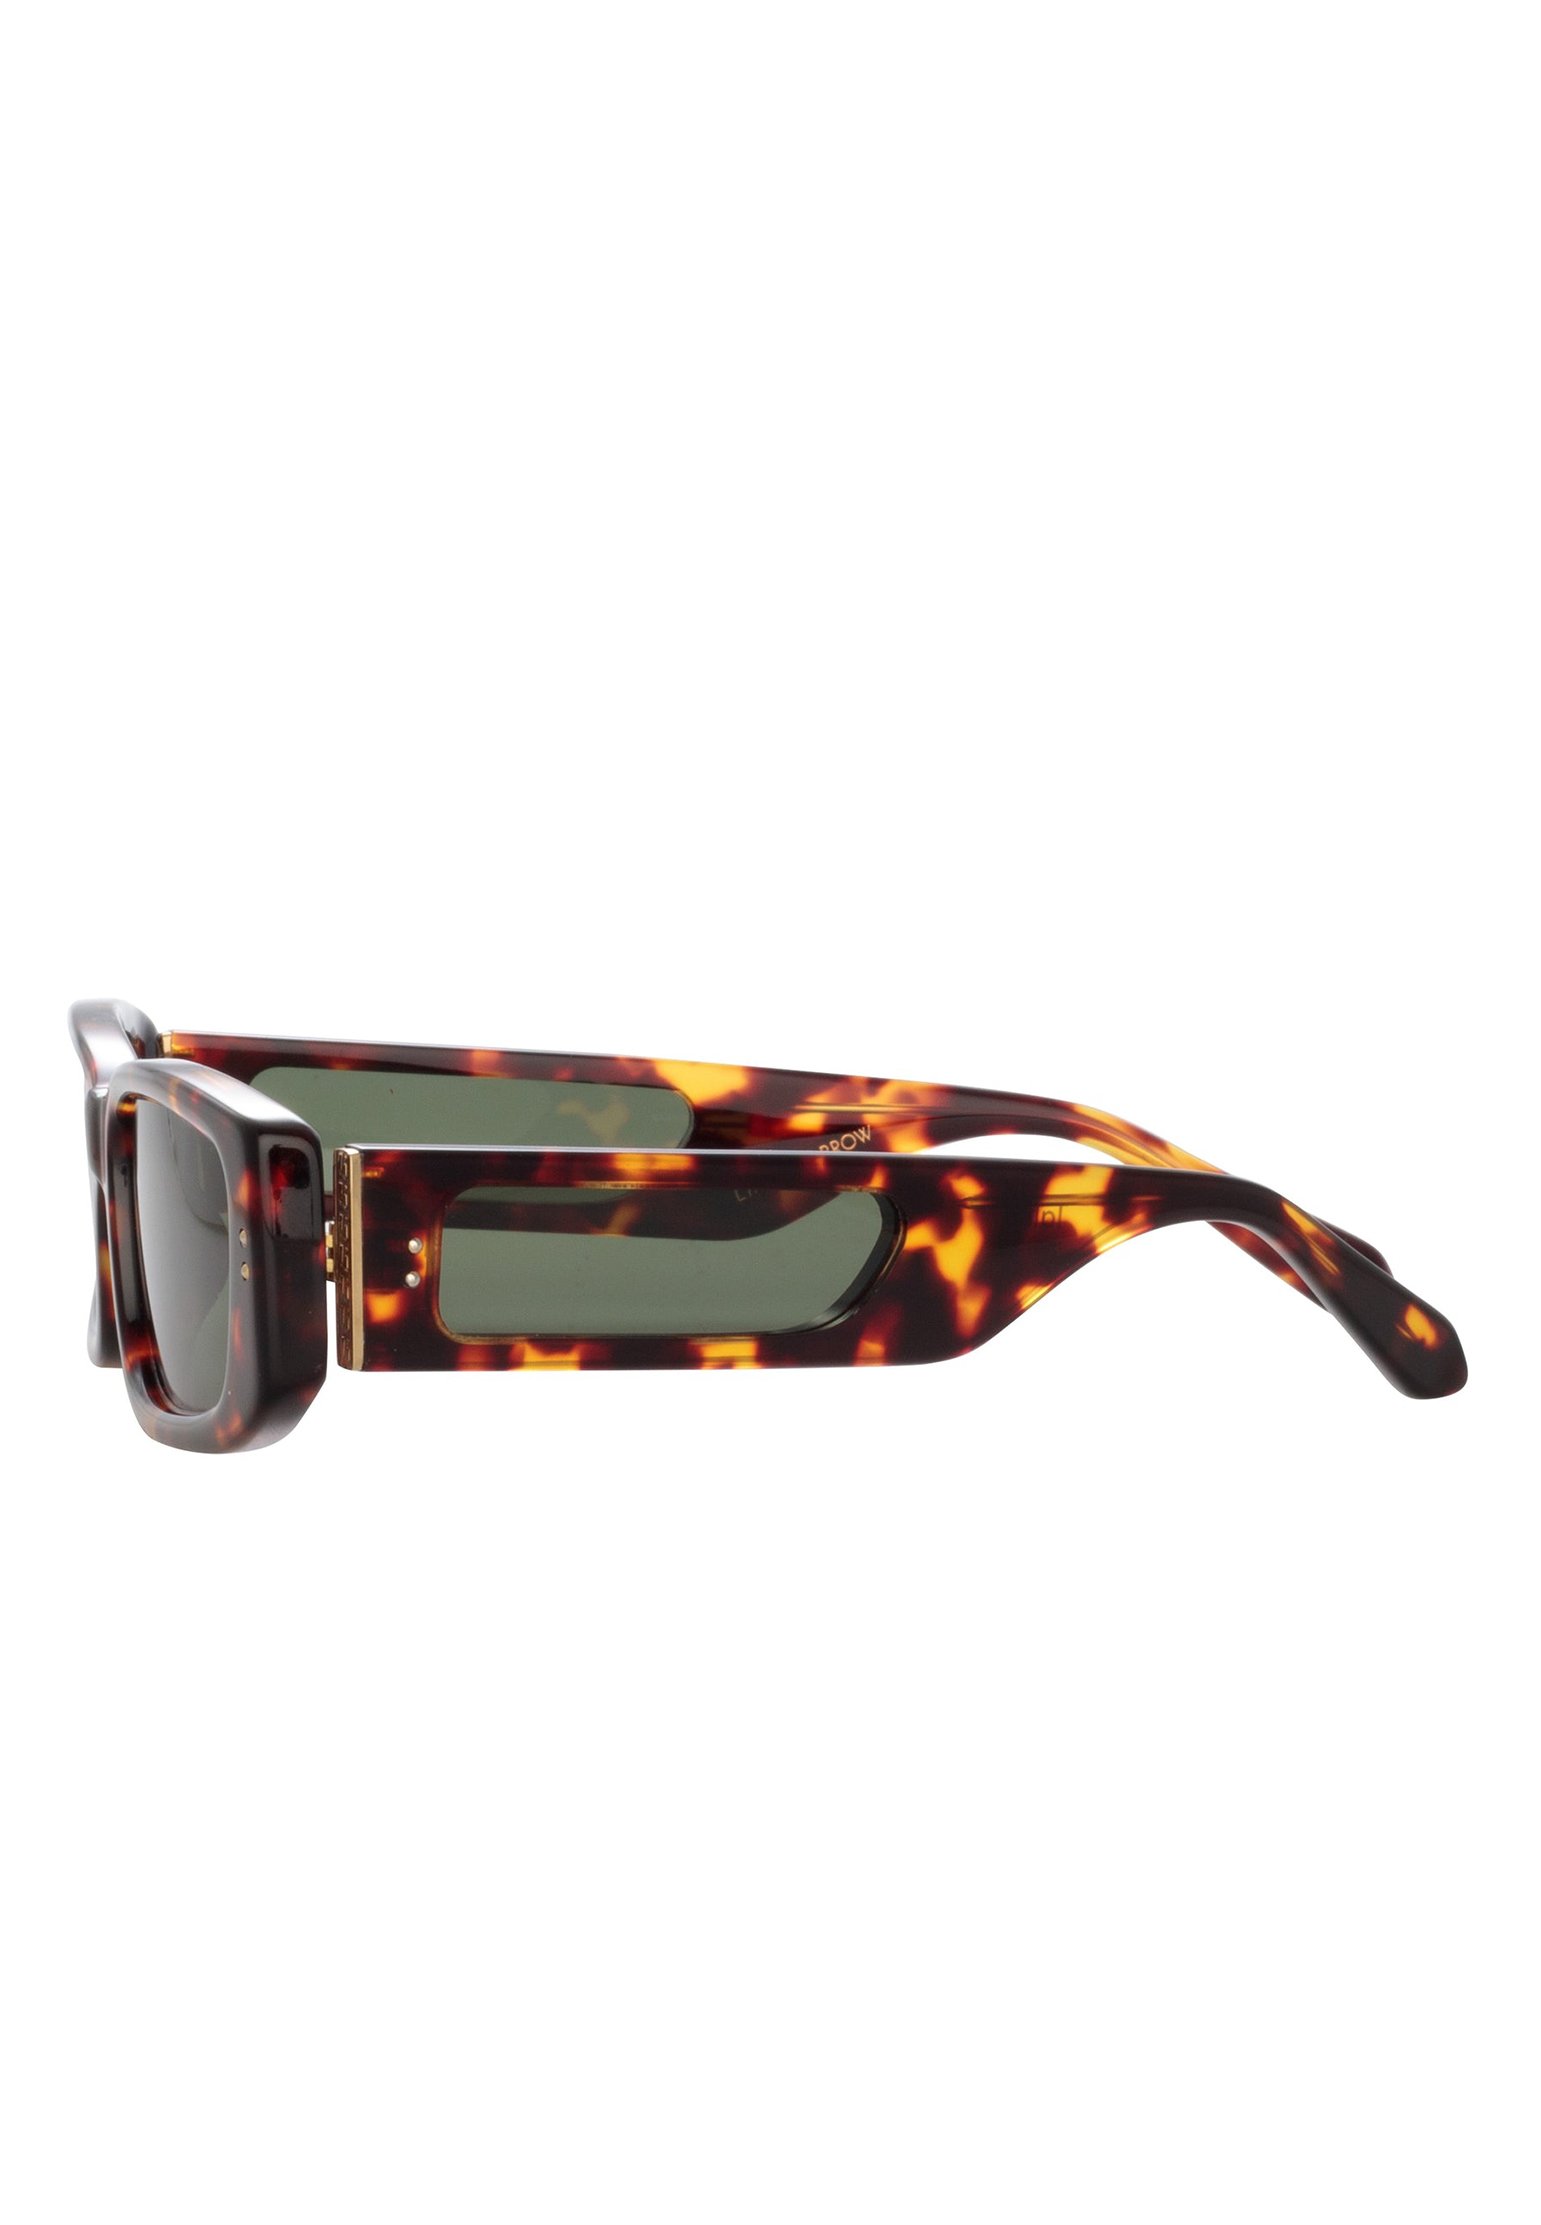 Sunglasses LINDA FARROW Color: brown (Code: 2218) in online store Allure